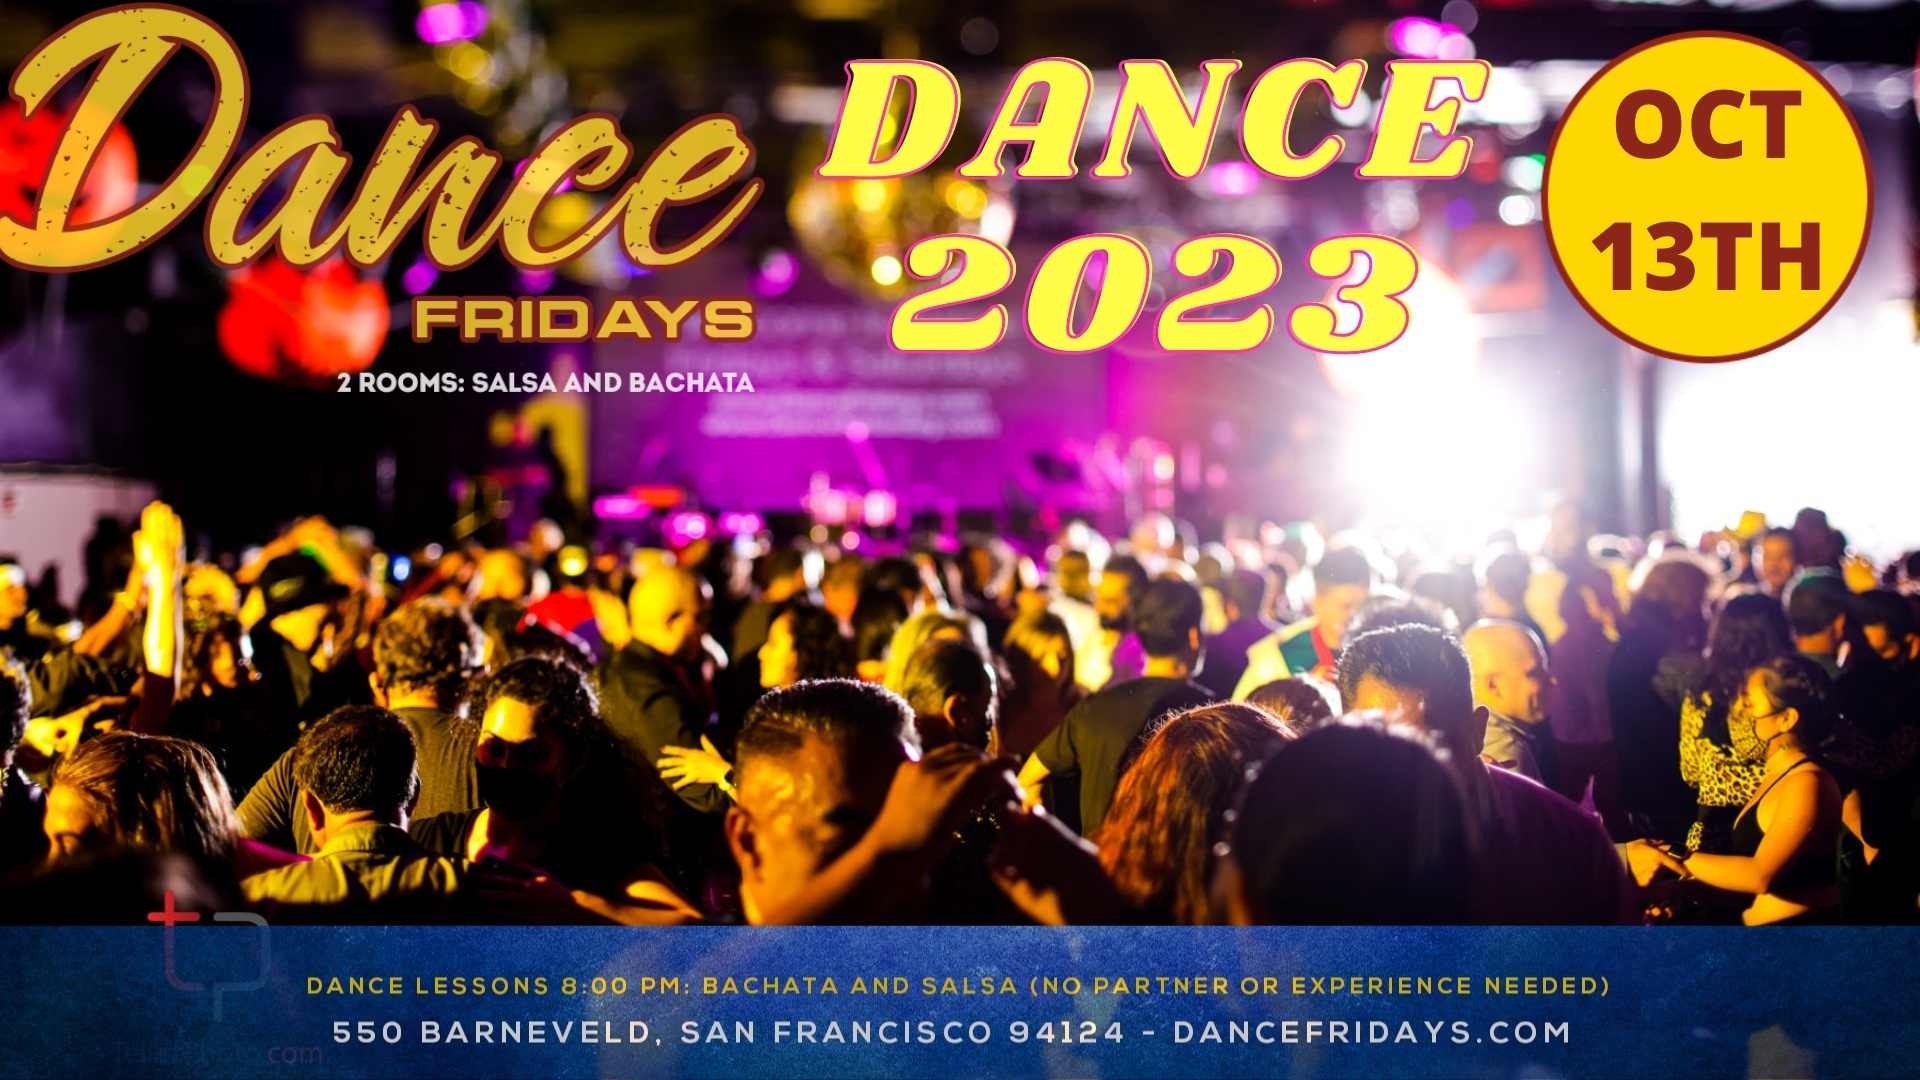 Dance Fridays - Salsa Dancing, Bachata Dancing, Dance Lessons for ALL, San Francisco, California, United States